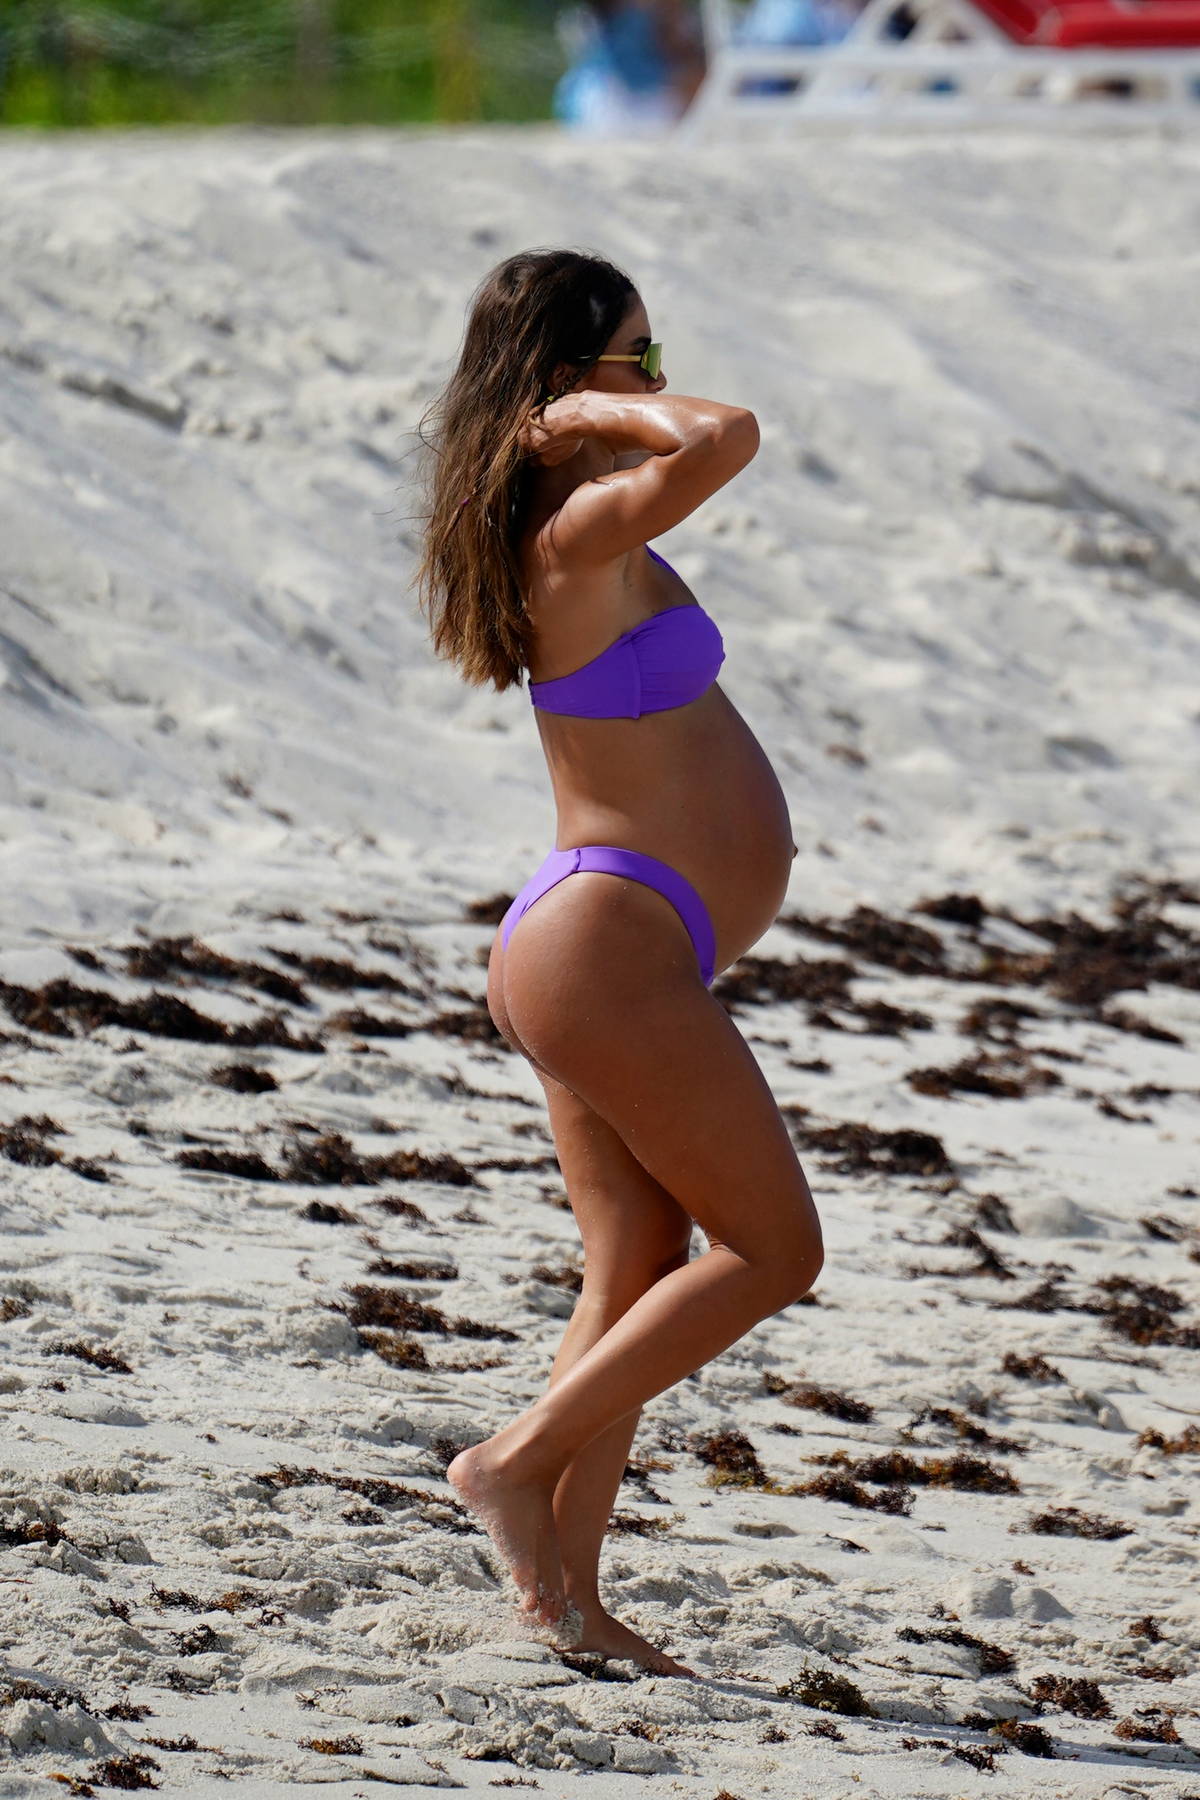 camila coelho bares her growing baby bump in a purple bikini at